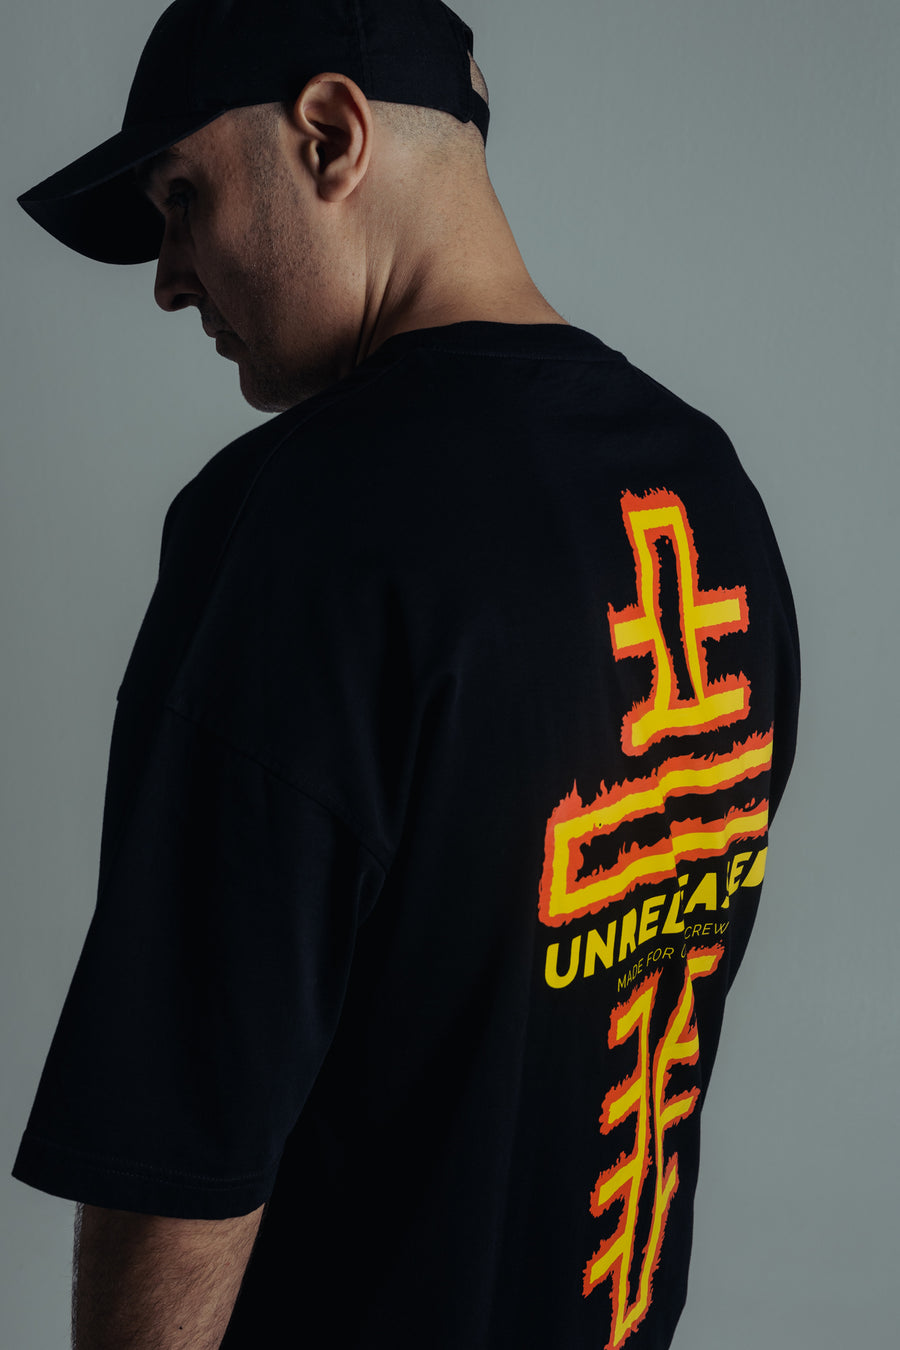 T-Shirt UNRELEASED S23 